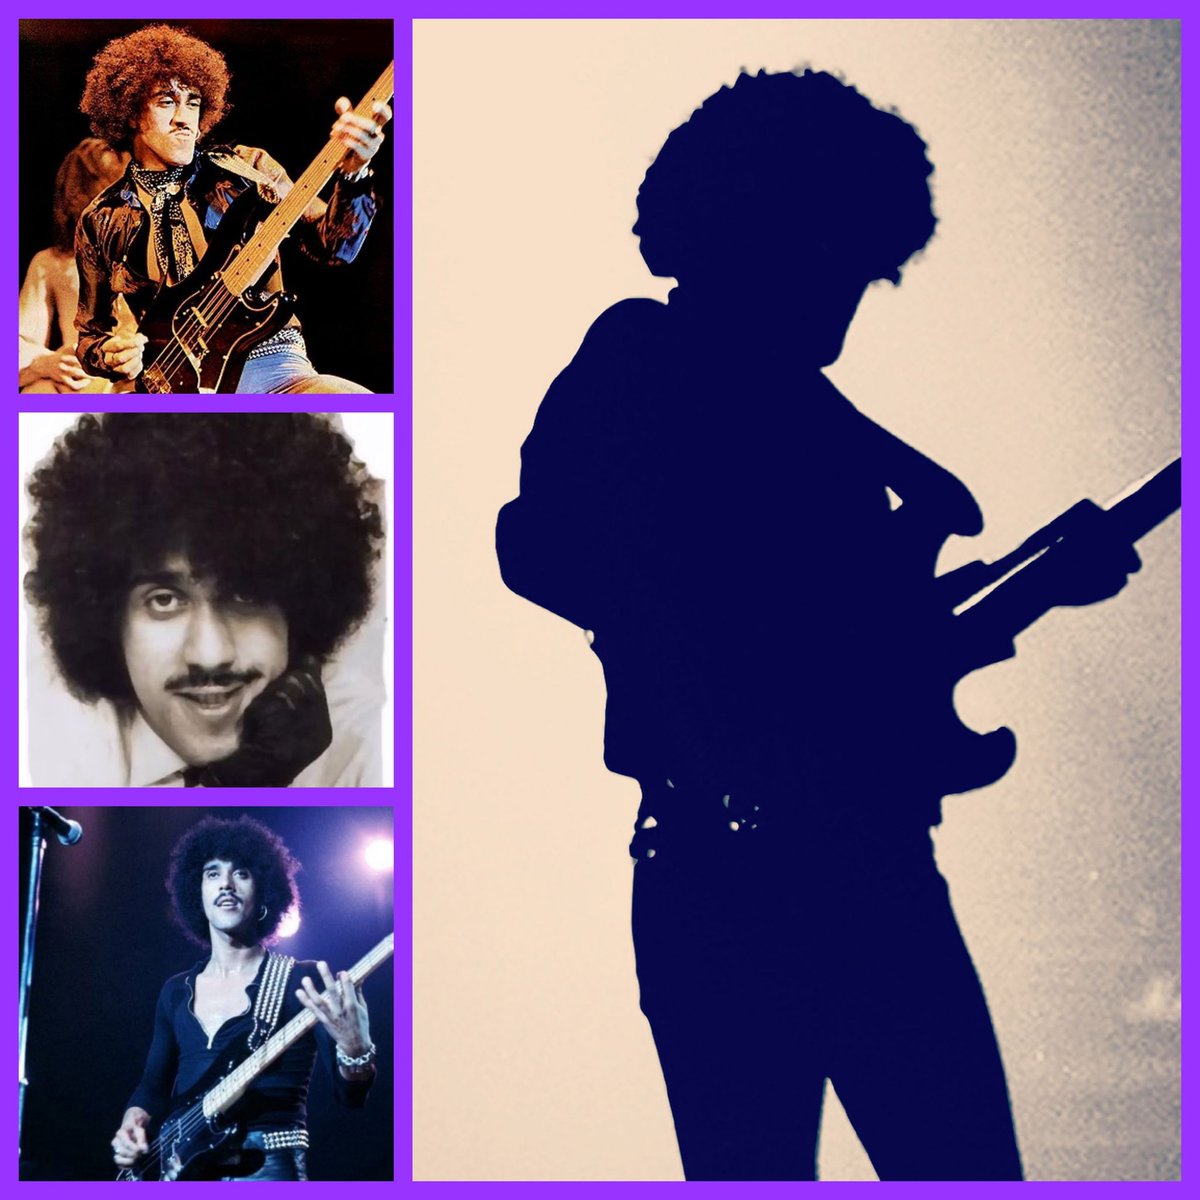 Un 20 de Agosto de 1949 nace una verdadera leyenda del rock, Phil Lynott, el icónico frontman de Thin Lizzy

#phillynott #thinlizzy #scottgorham #garymoore #briandowney #hardrock #rock #rocknroll #ireland #heavymetal #johnsykes #classicrock #dublin   #blackrose #irishrock #blues